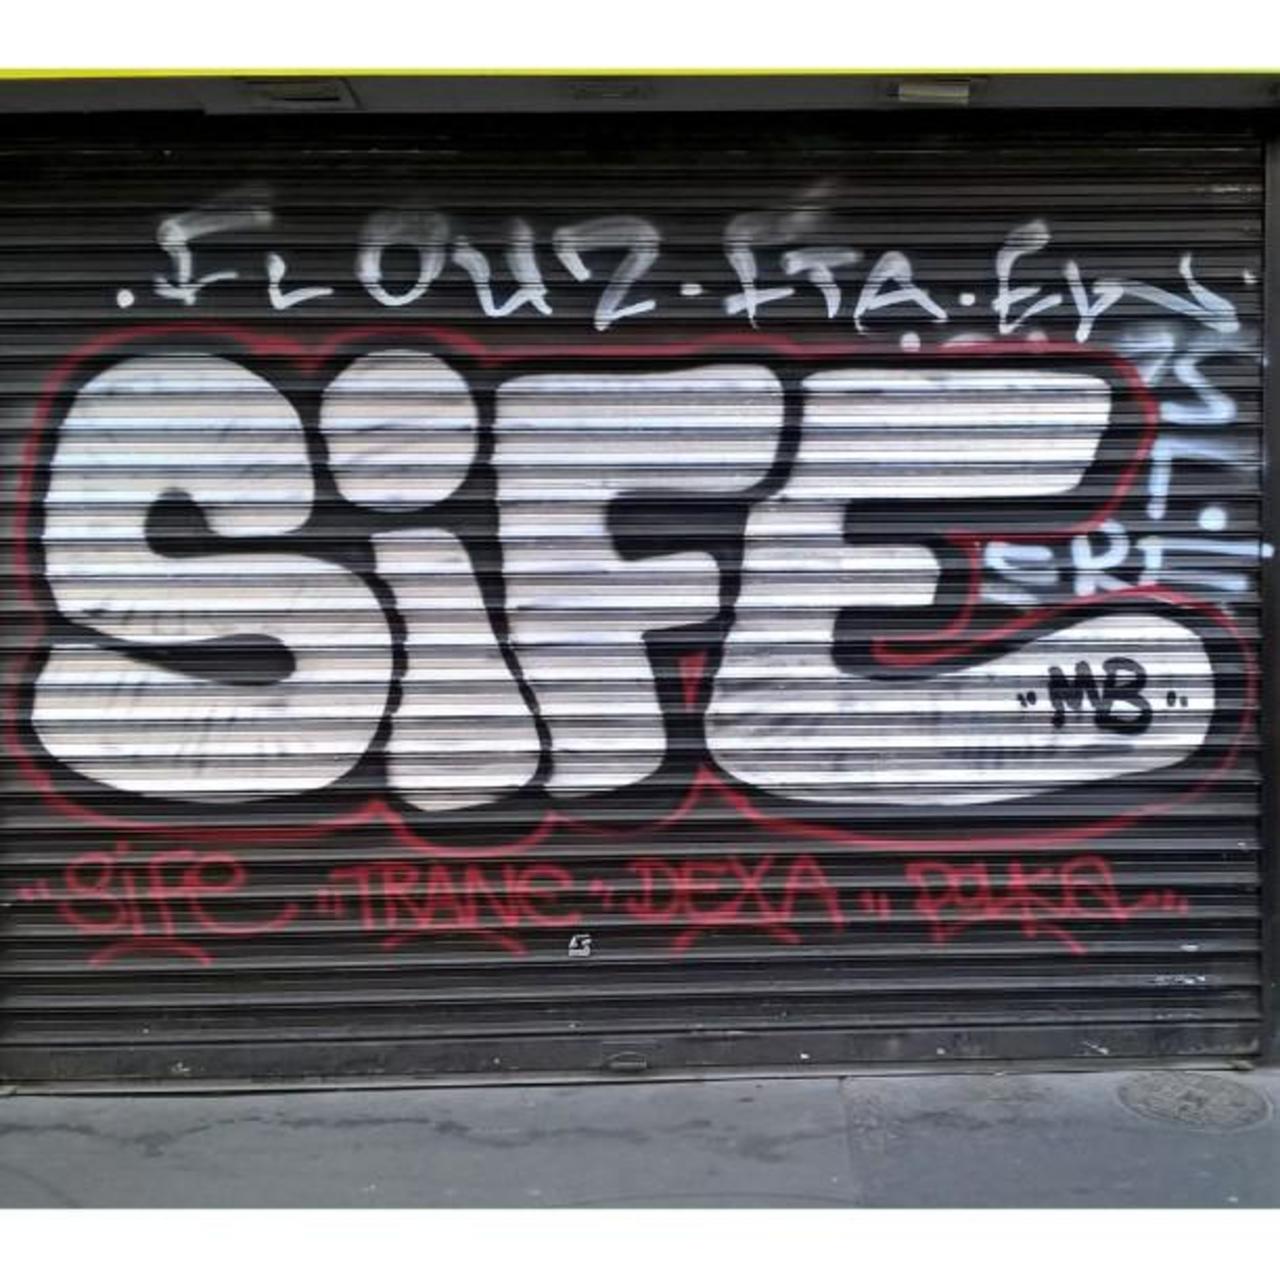 #Paris #graffiti photo by @maxdimontemarciano http://ift.tt/1LZMxNE #StreetArt http://t.co/QKJjX0Io7G